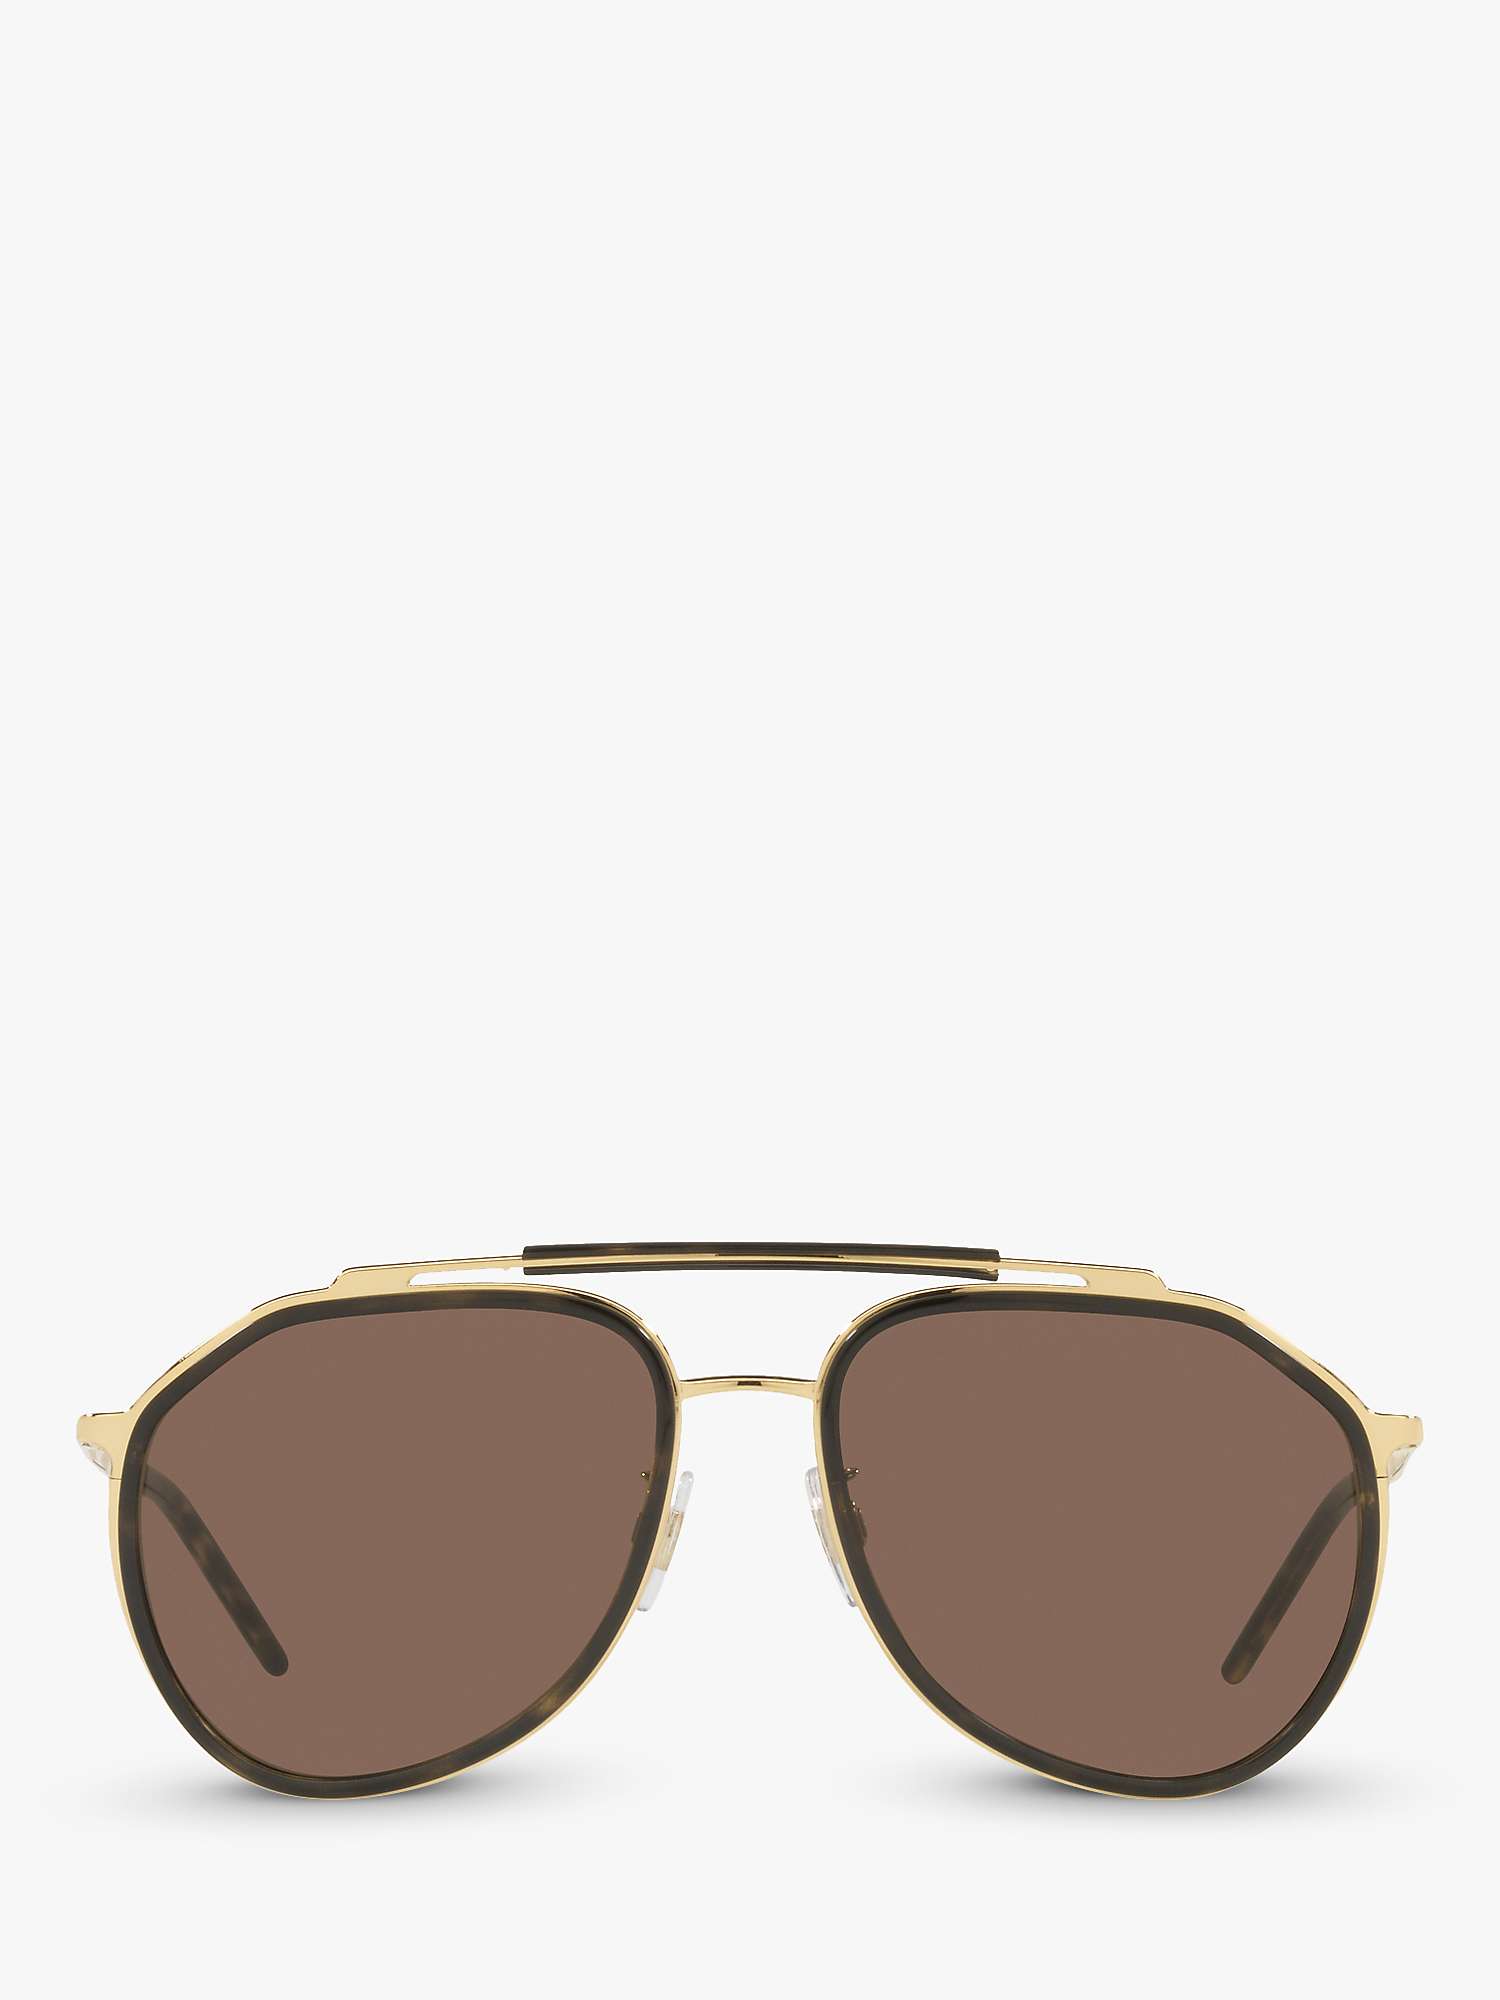 Buy Dolce & Gabbana DG227702 Men's Aviator Sunglasses, Gold/Havana Online at johnlewis.com